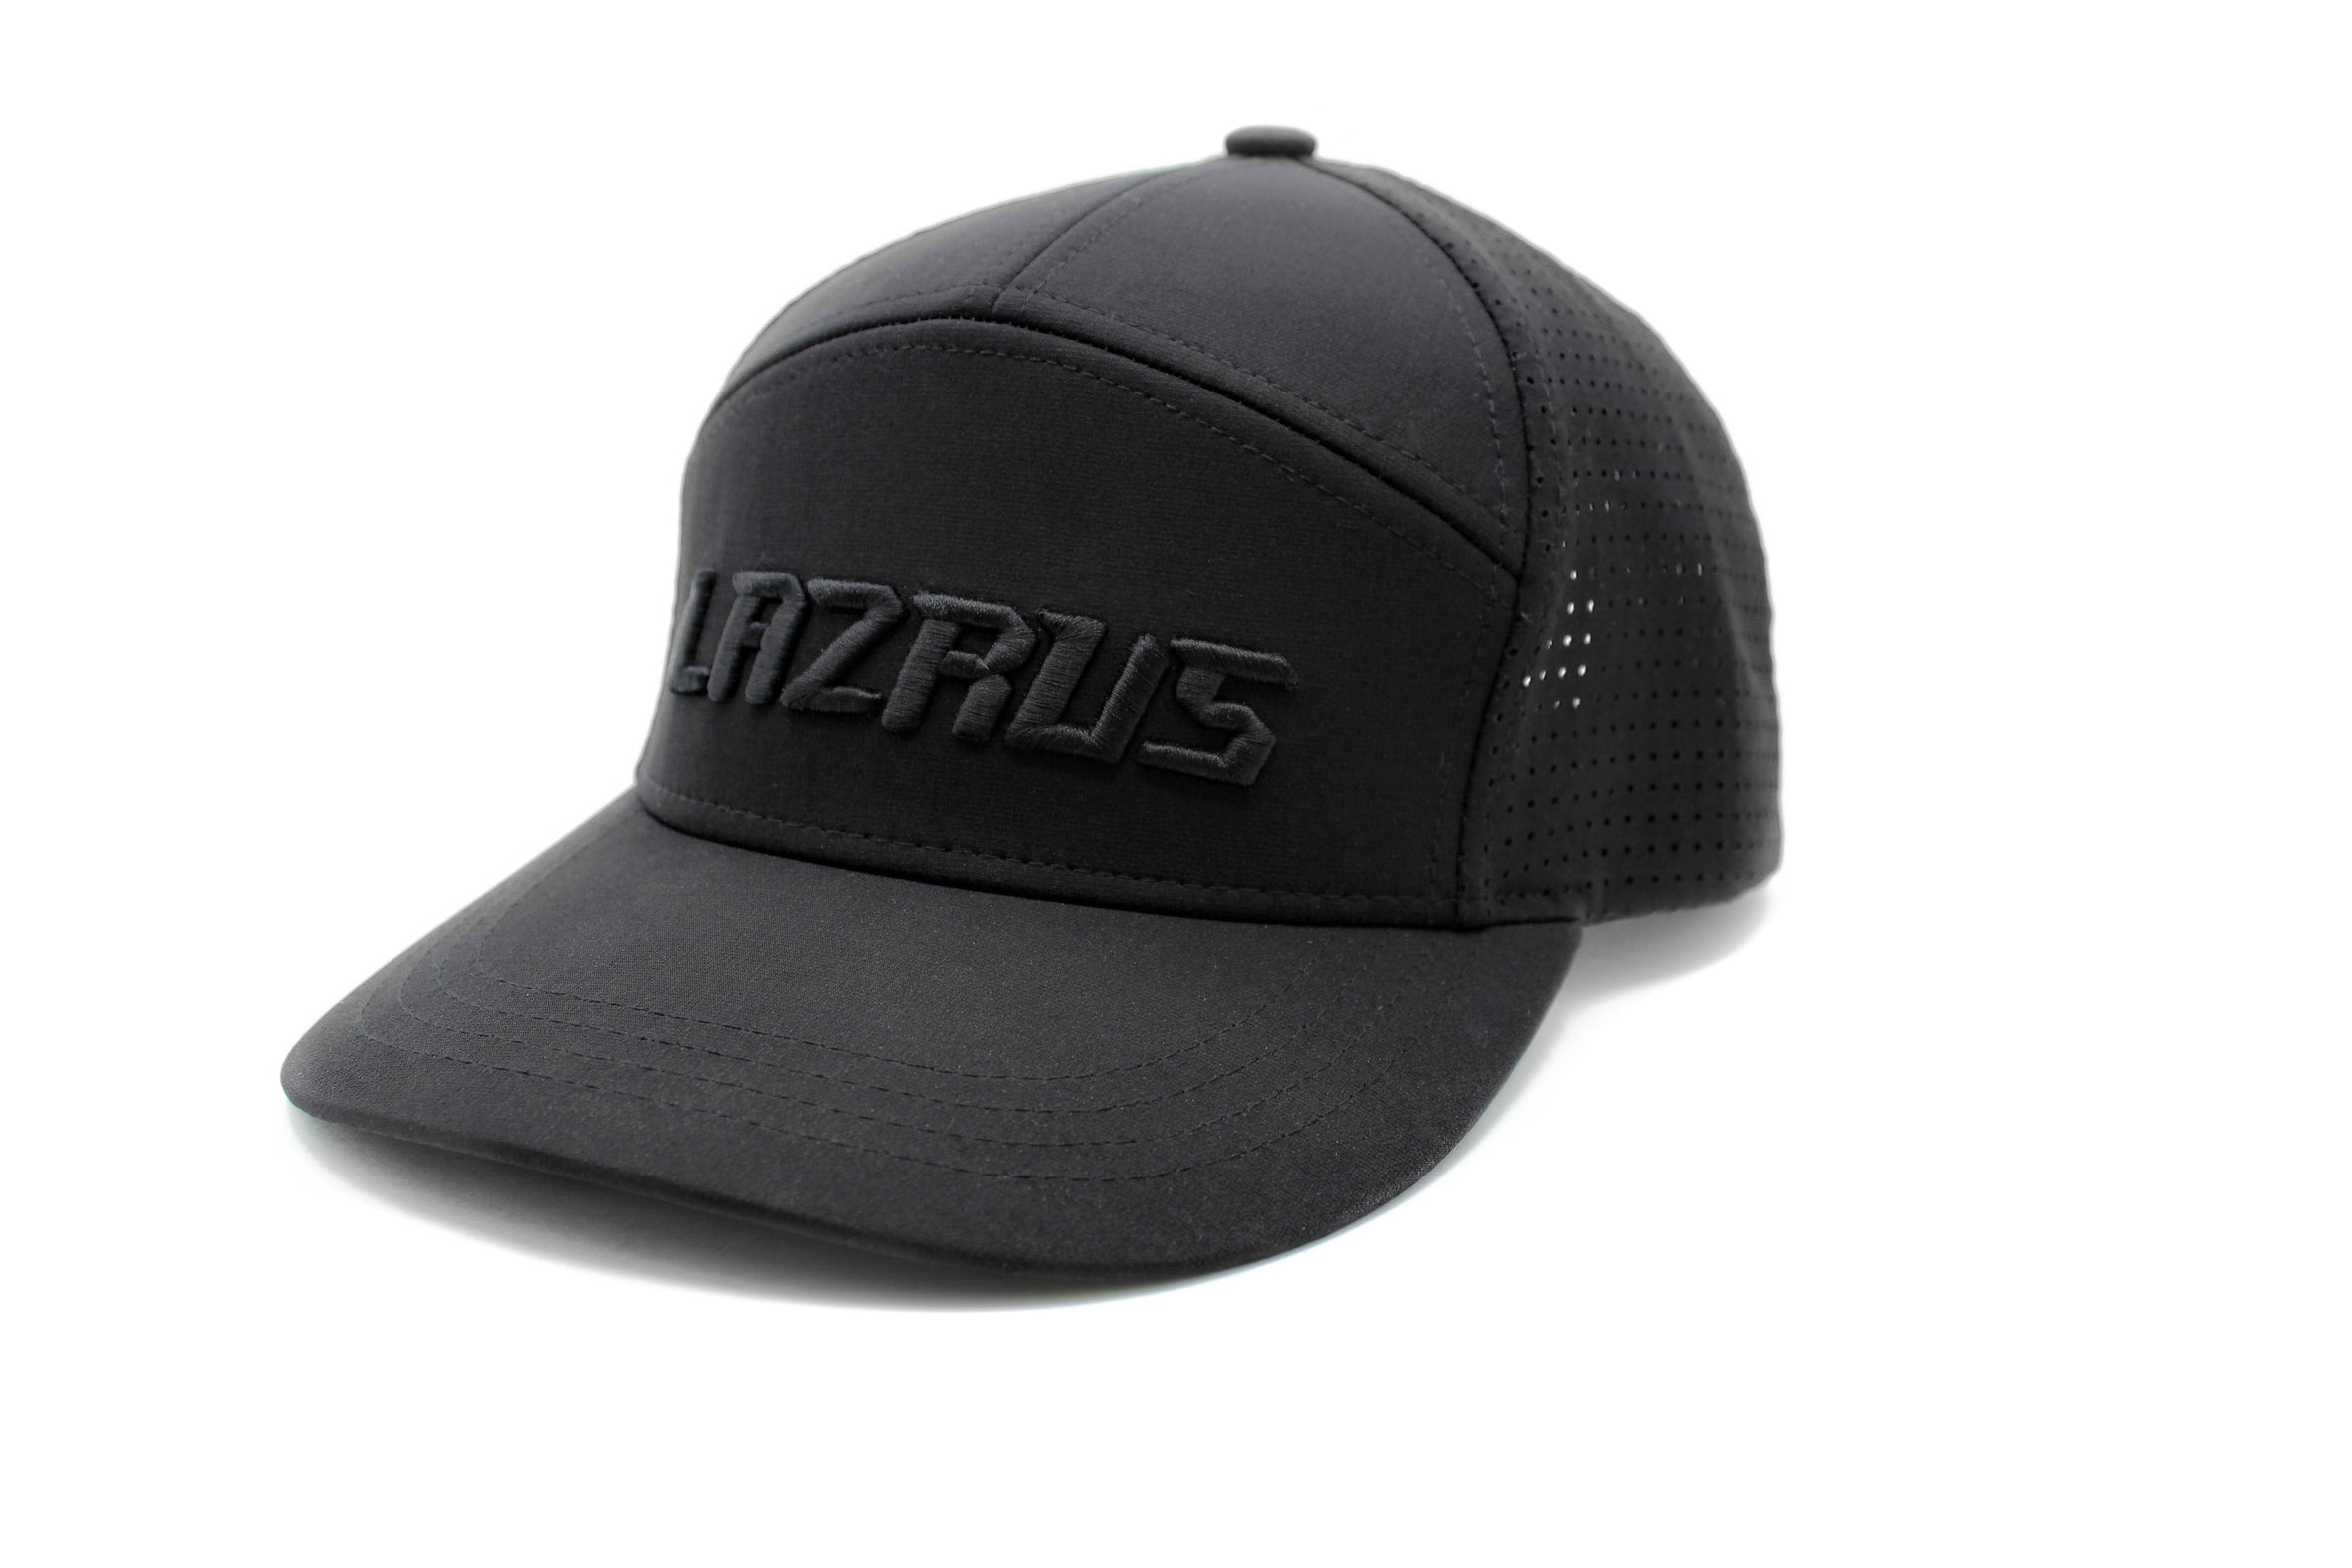 Lazrus Golf Snapback Hats